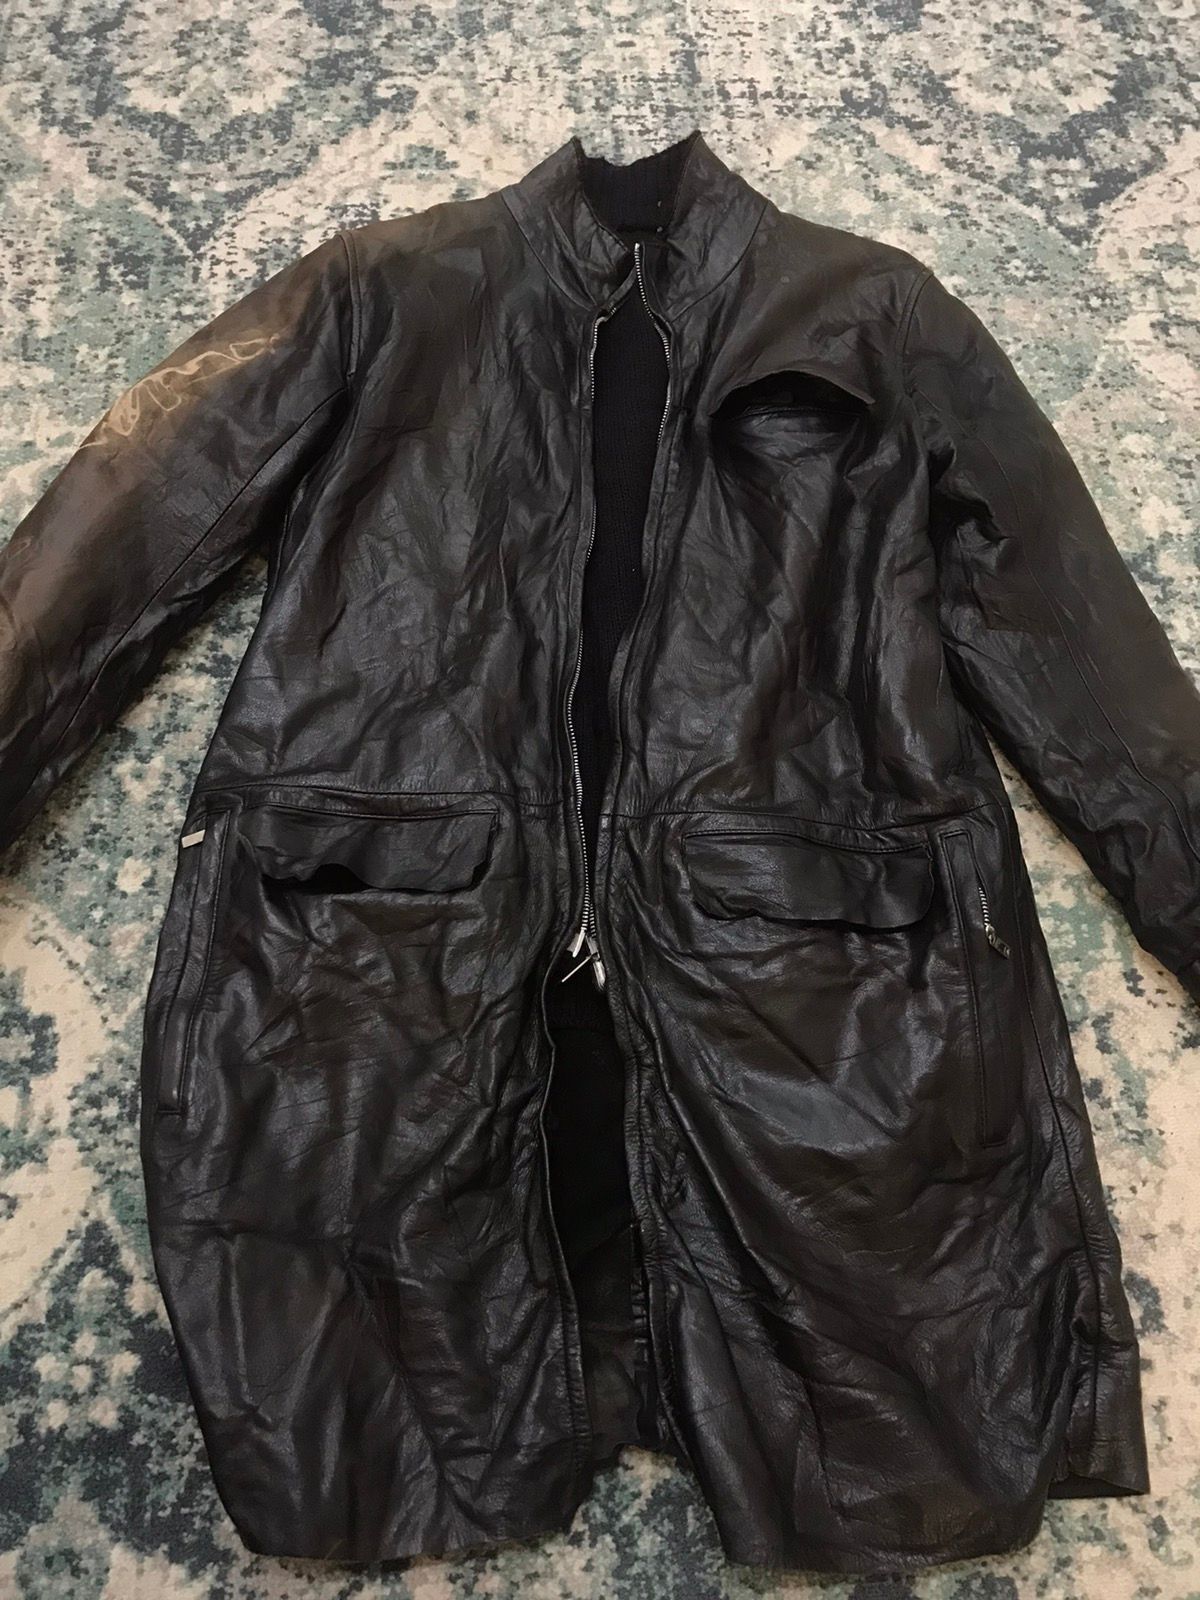 AW99 Undercover Ambivalence Cow Leather Coat - Size Medium - 14